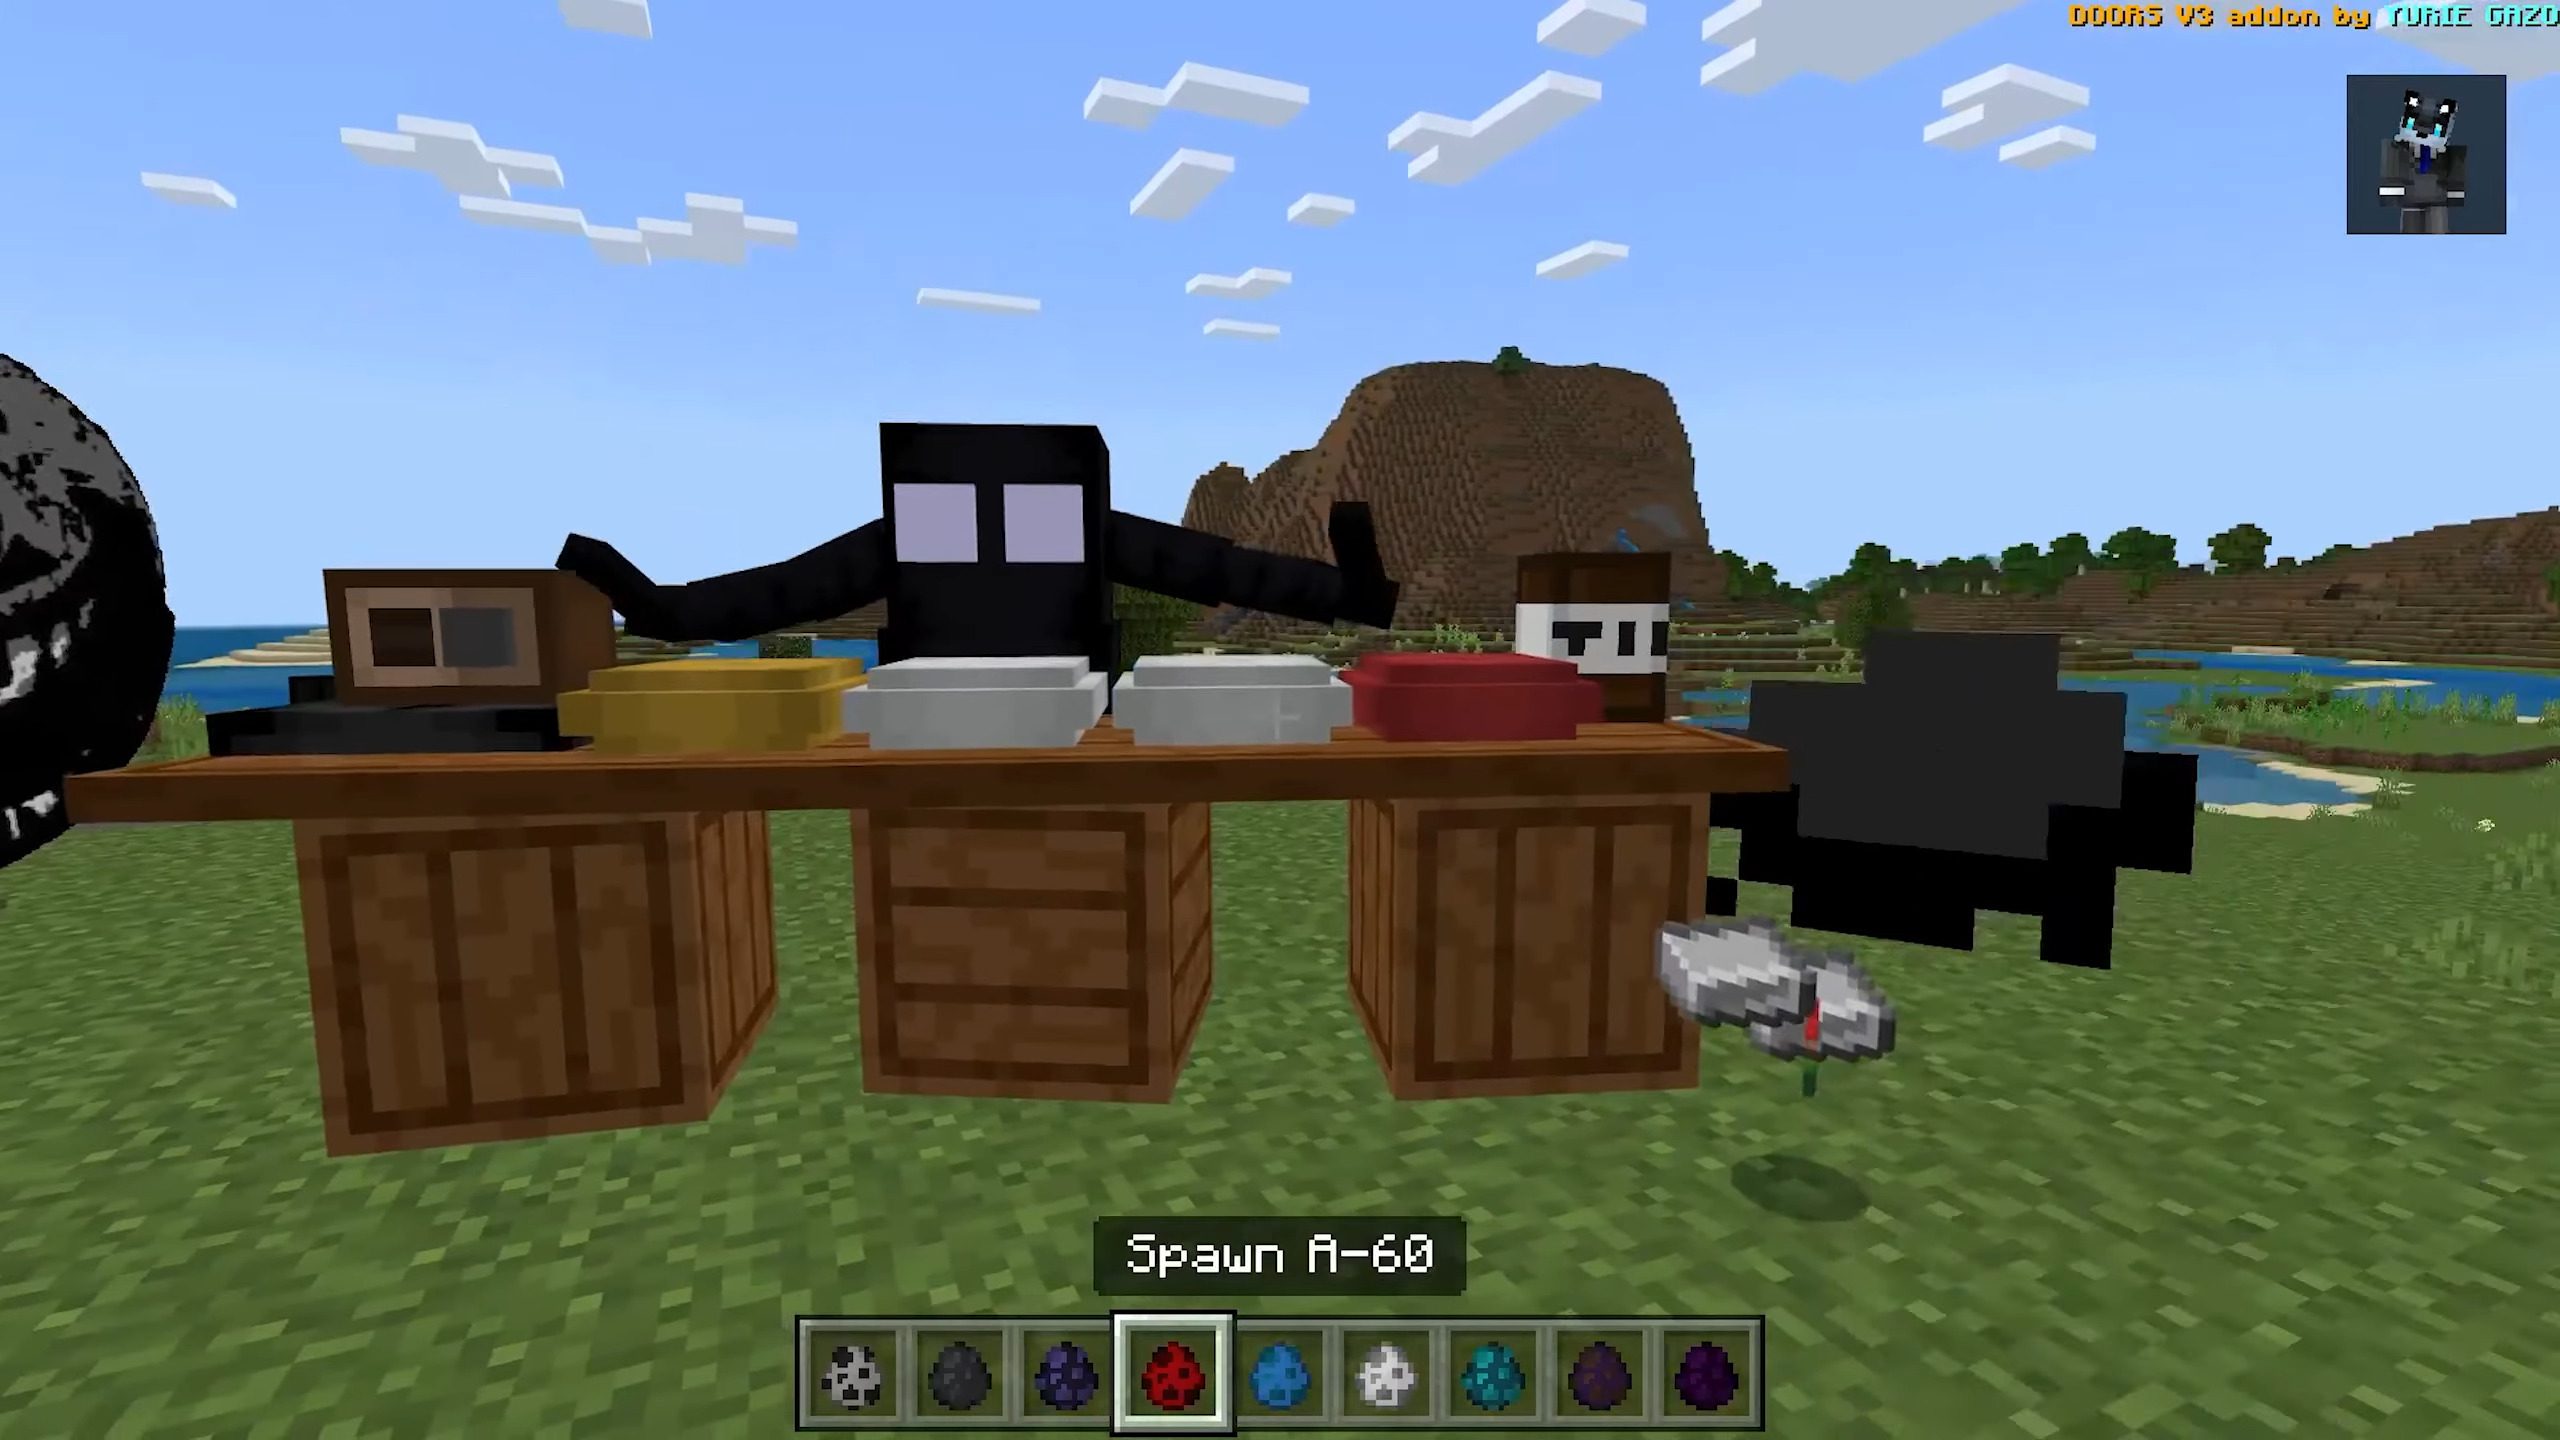 Roblox Doors Hotel+ Addon for Minecraft